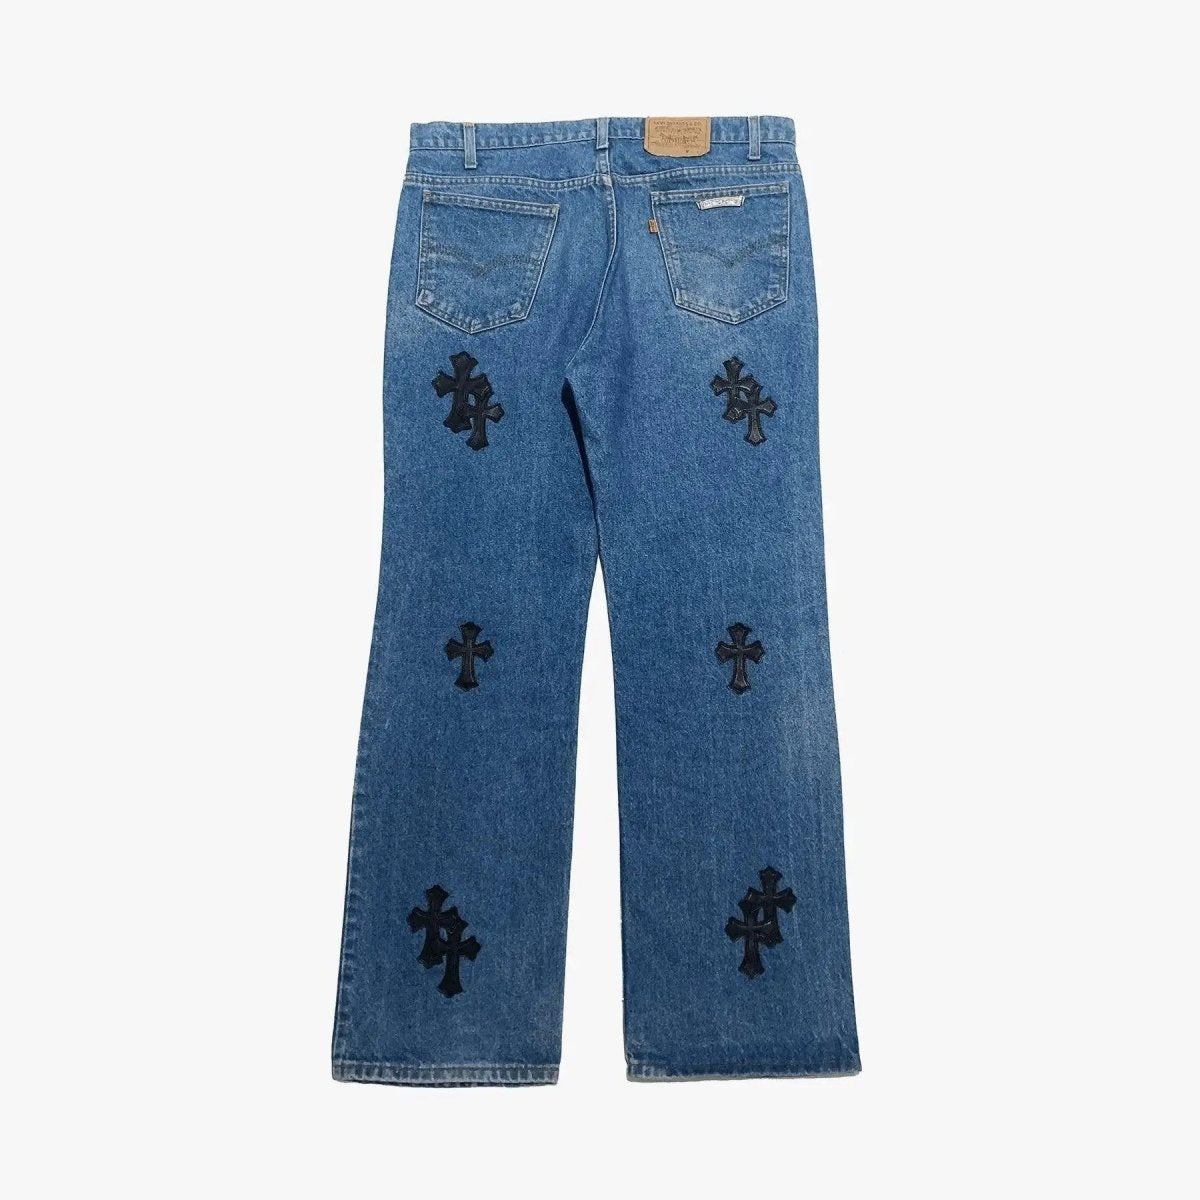 Chrome Hearts Levi's 517 Cross Patch Washed Denim Jeans - SHENGLI ROAD MARKET